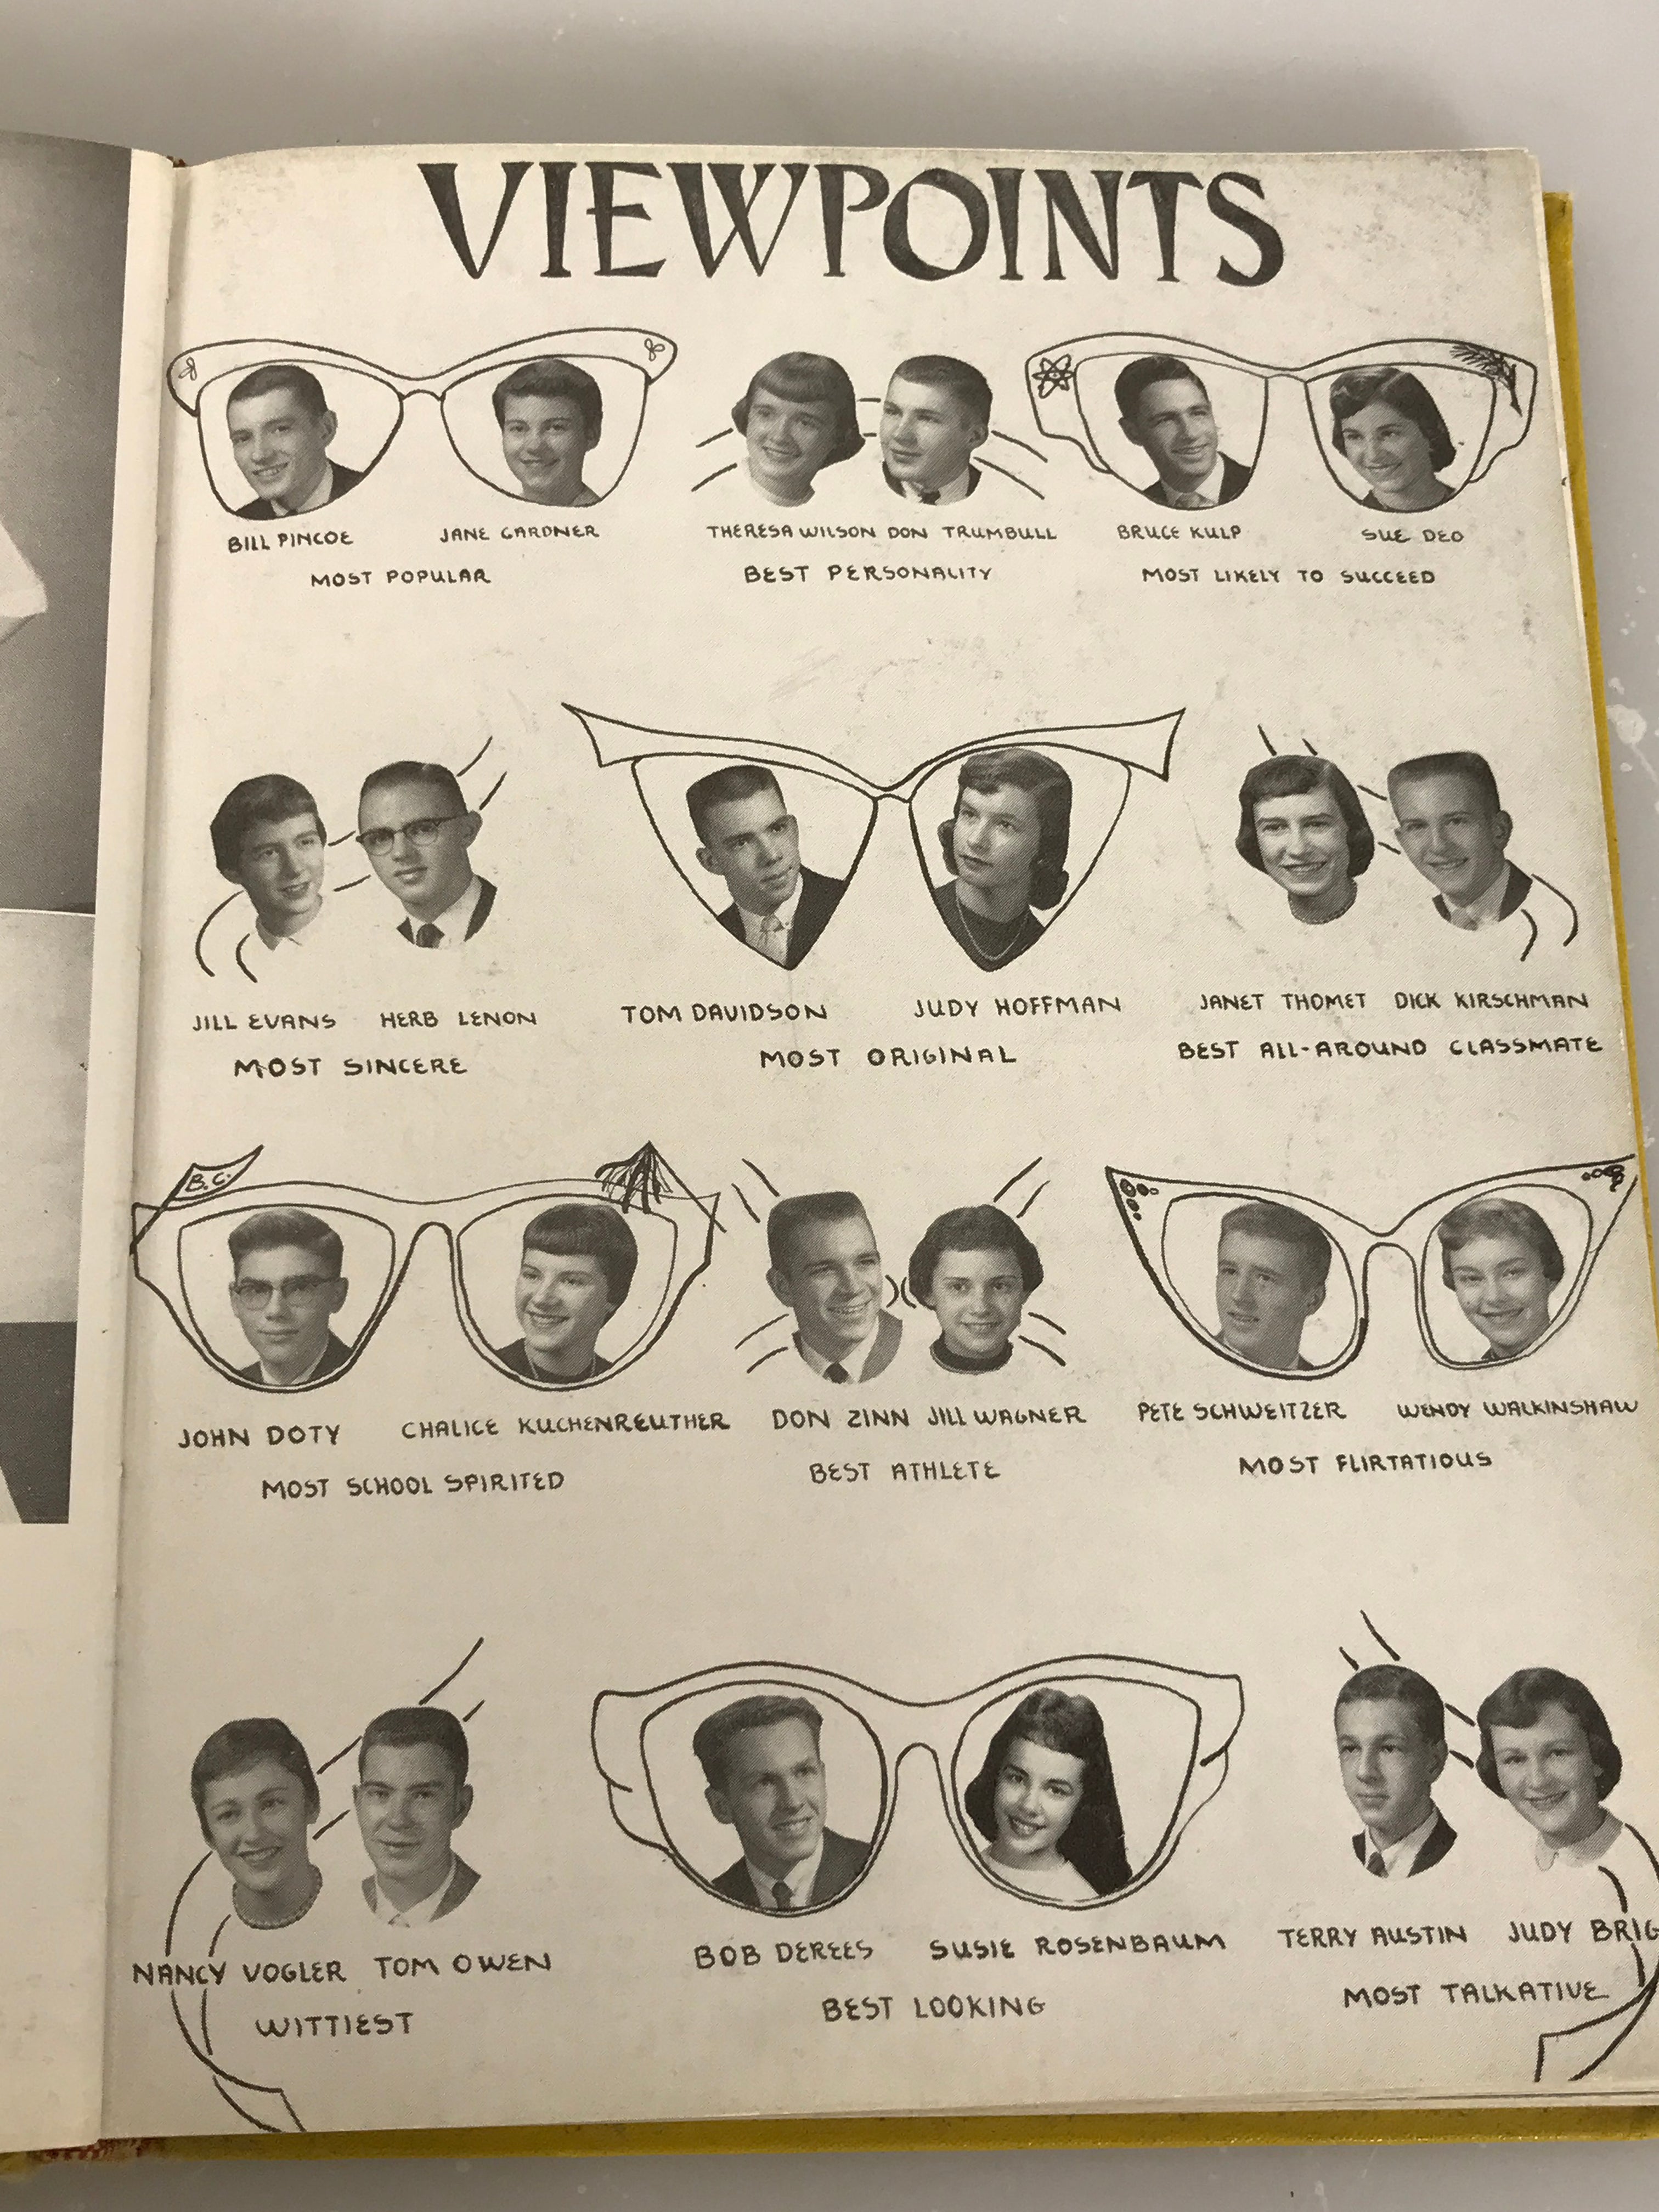 1957 Battle Creek High School Yearbook Battle Creek Michigan HC